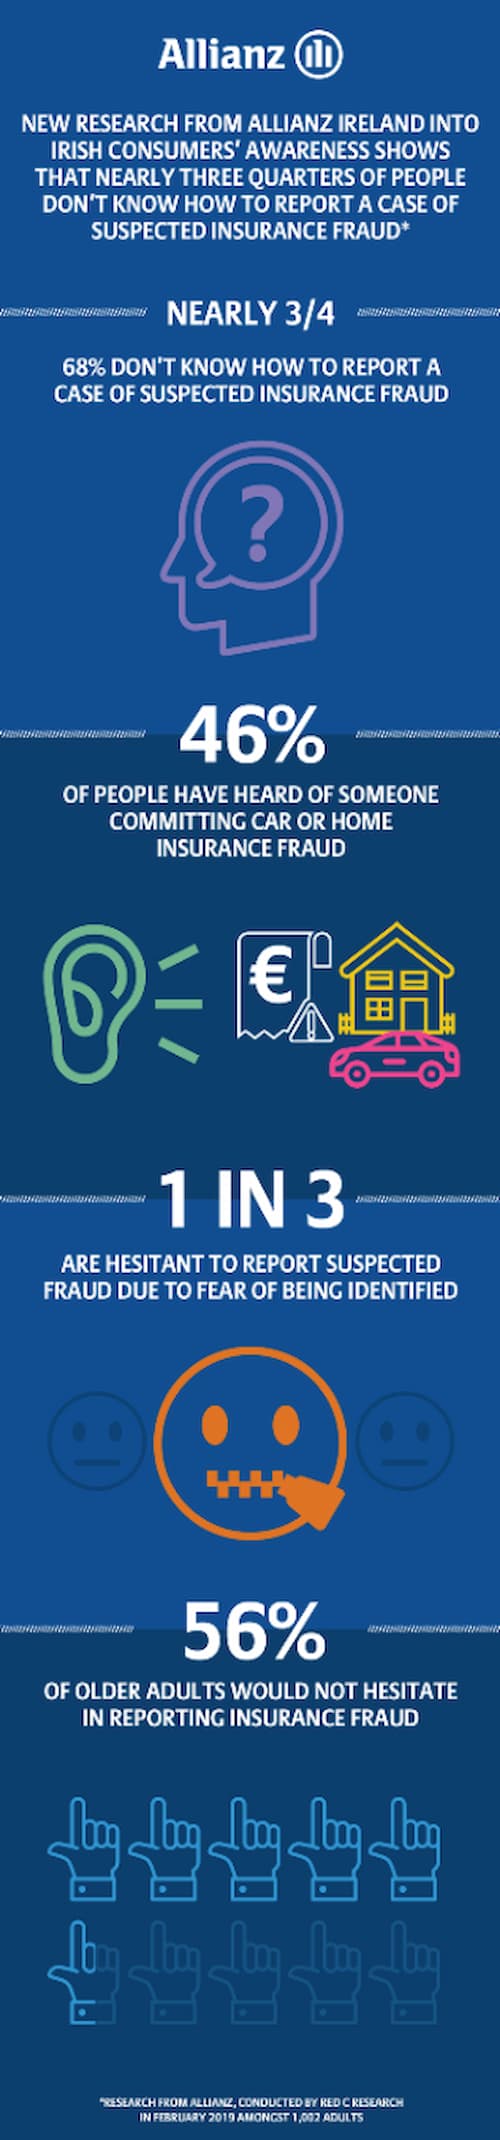 Insurance fraud fact sheet